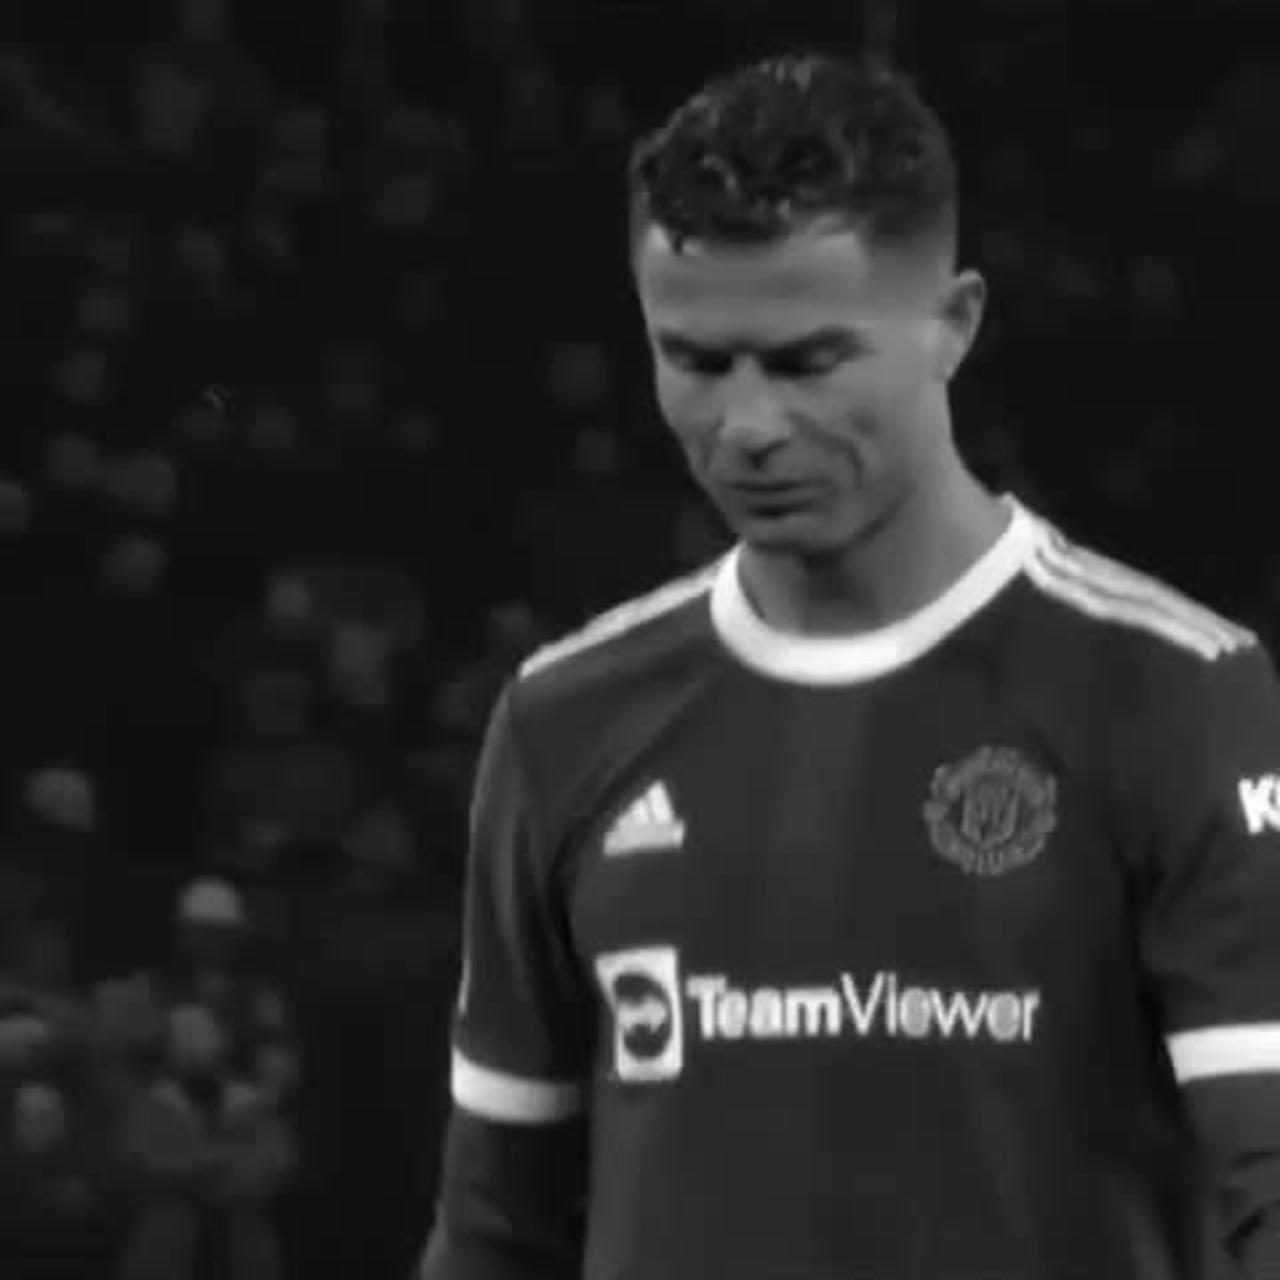 Cristiano Ronaldo's darkest time is hitting him hard